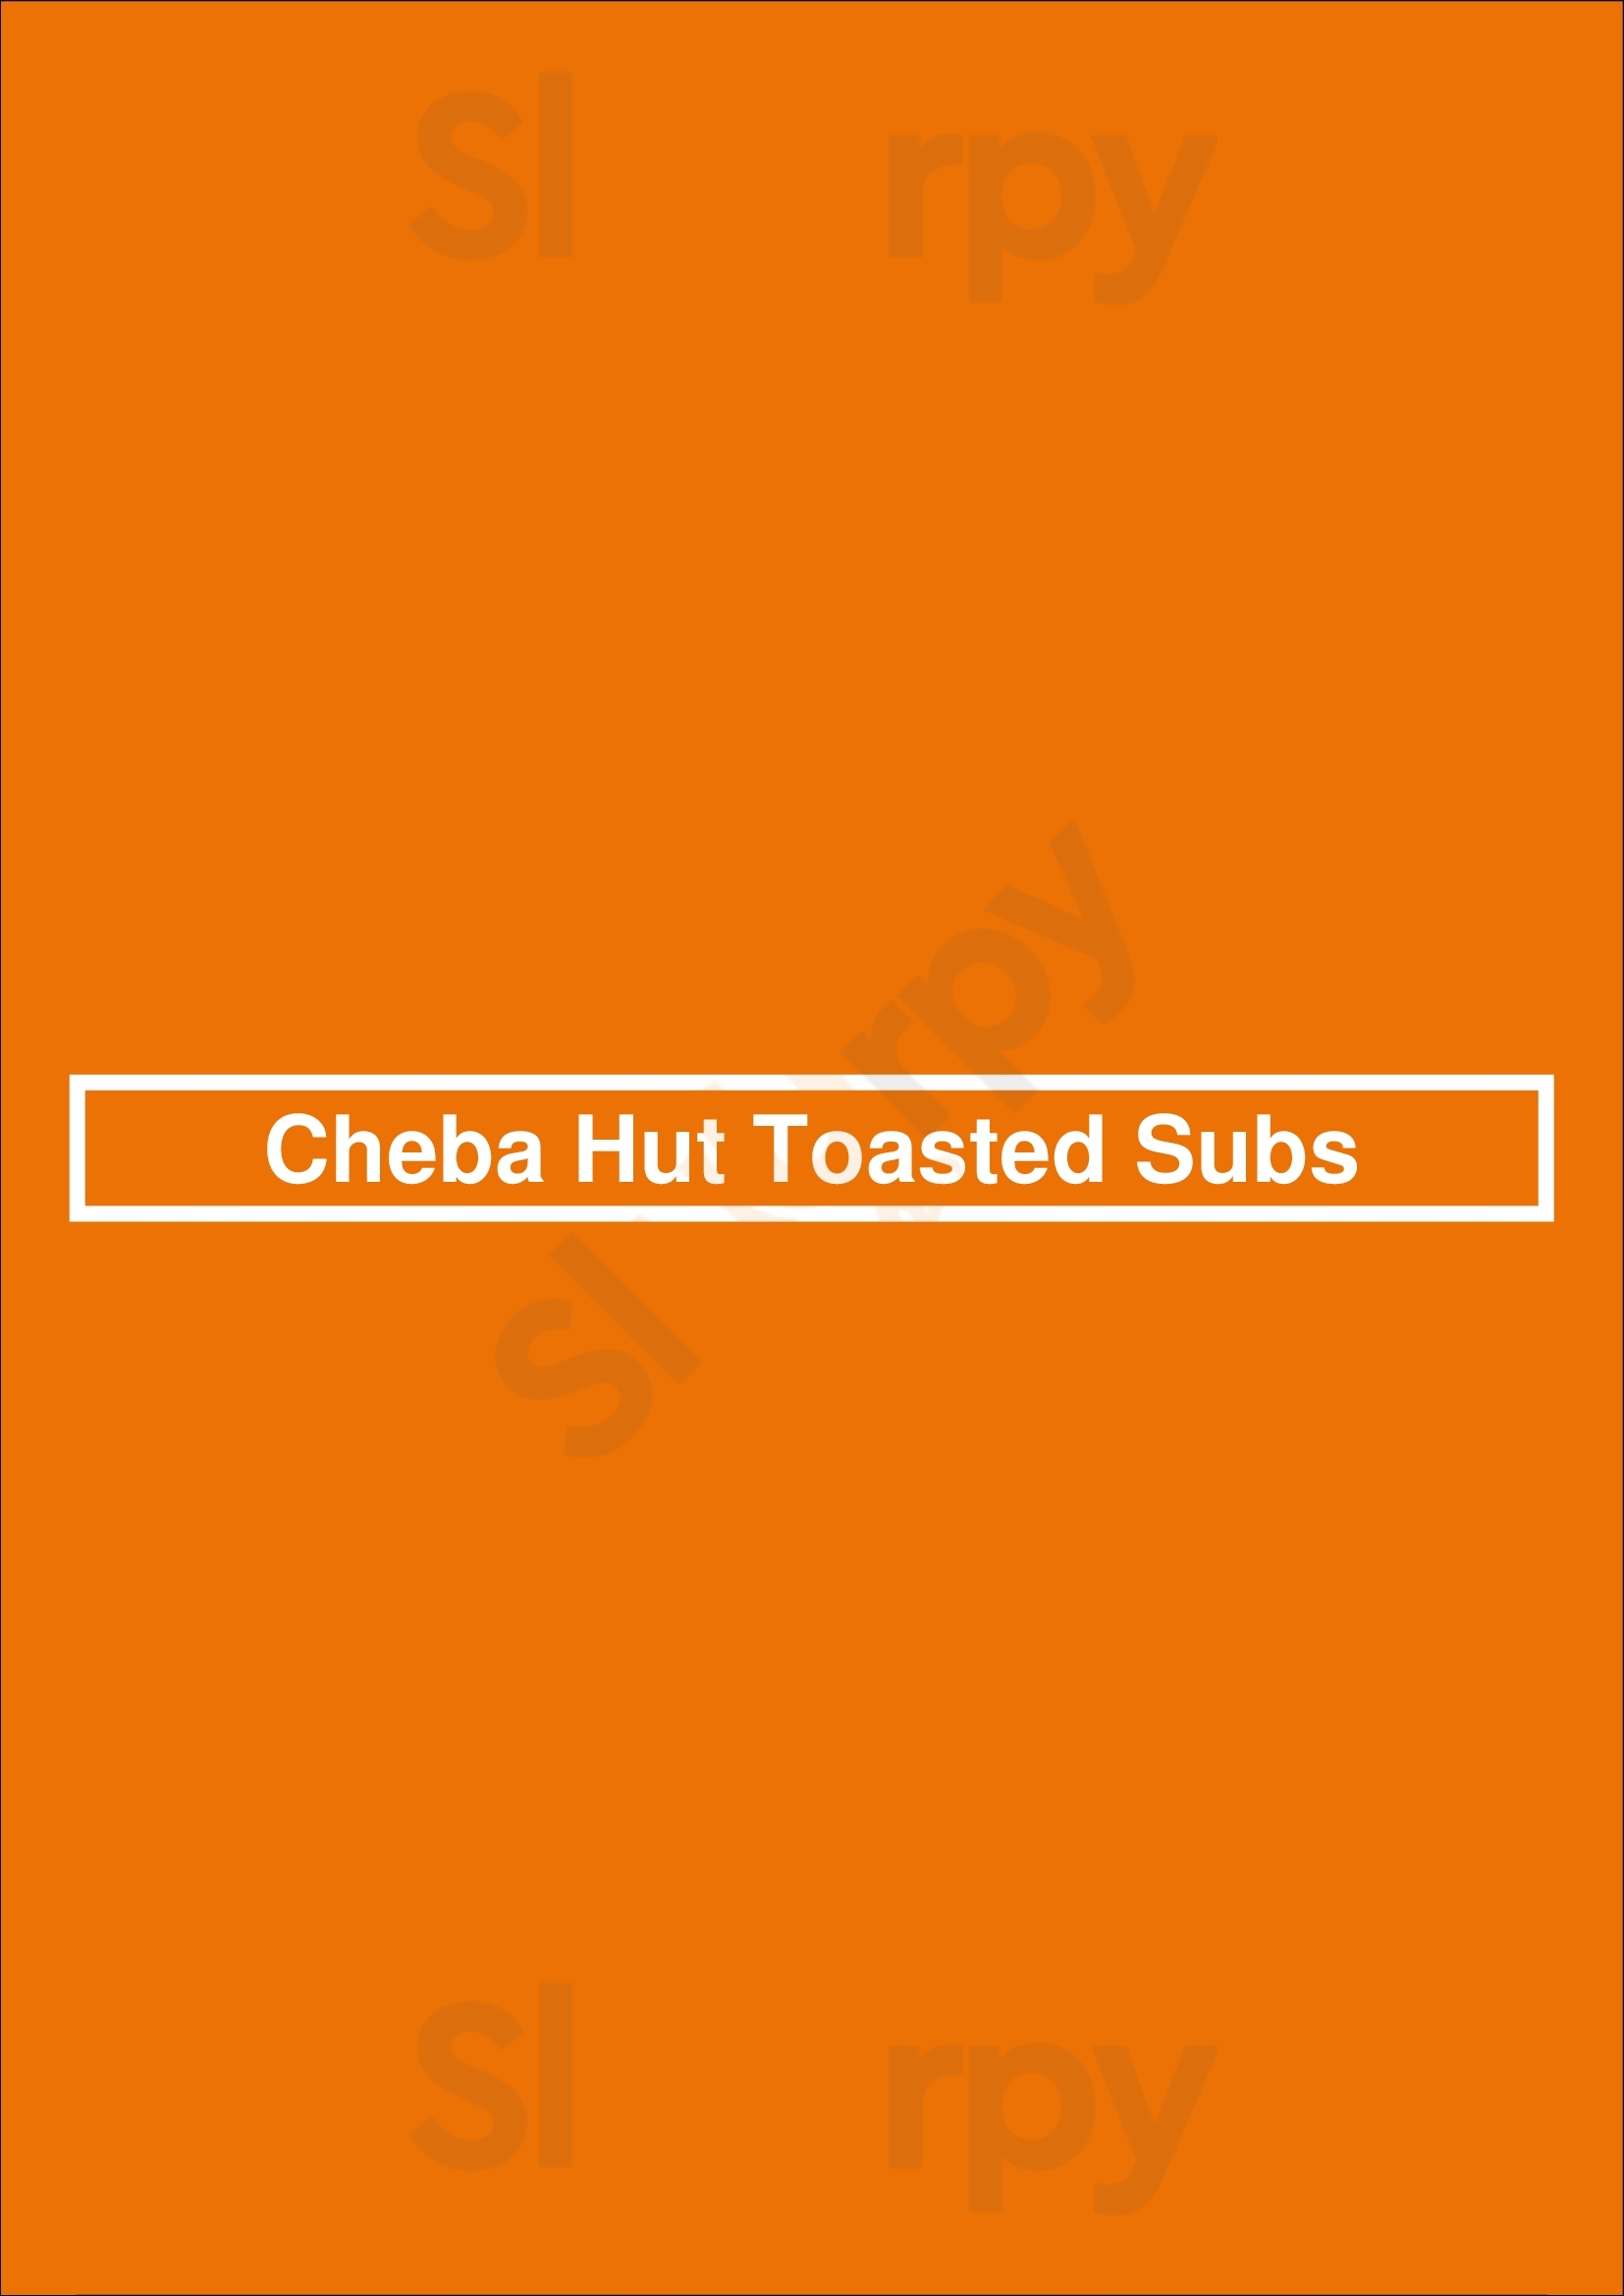 Cheba Hut Toasted Subs Las Vegas Menu - 1